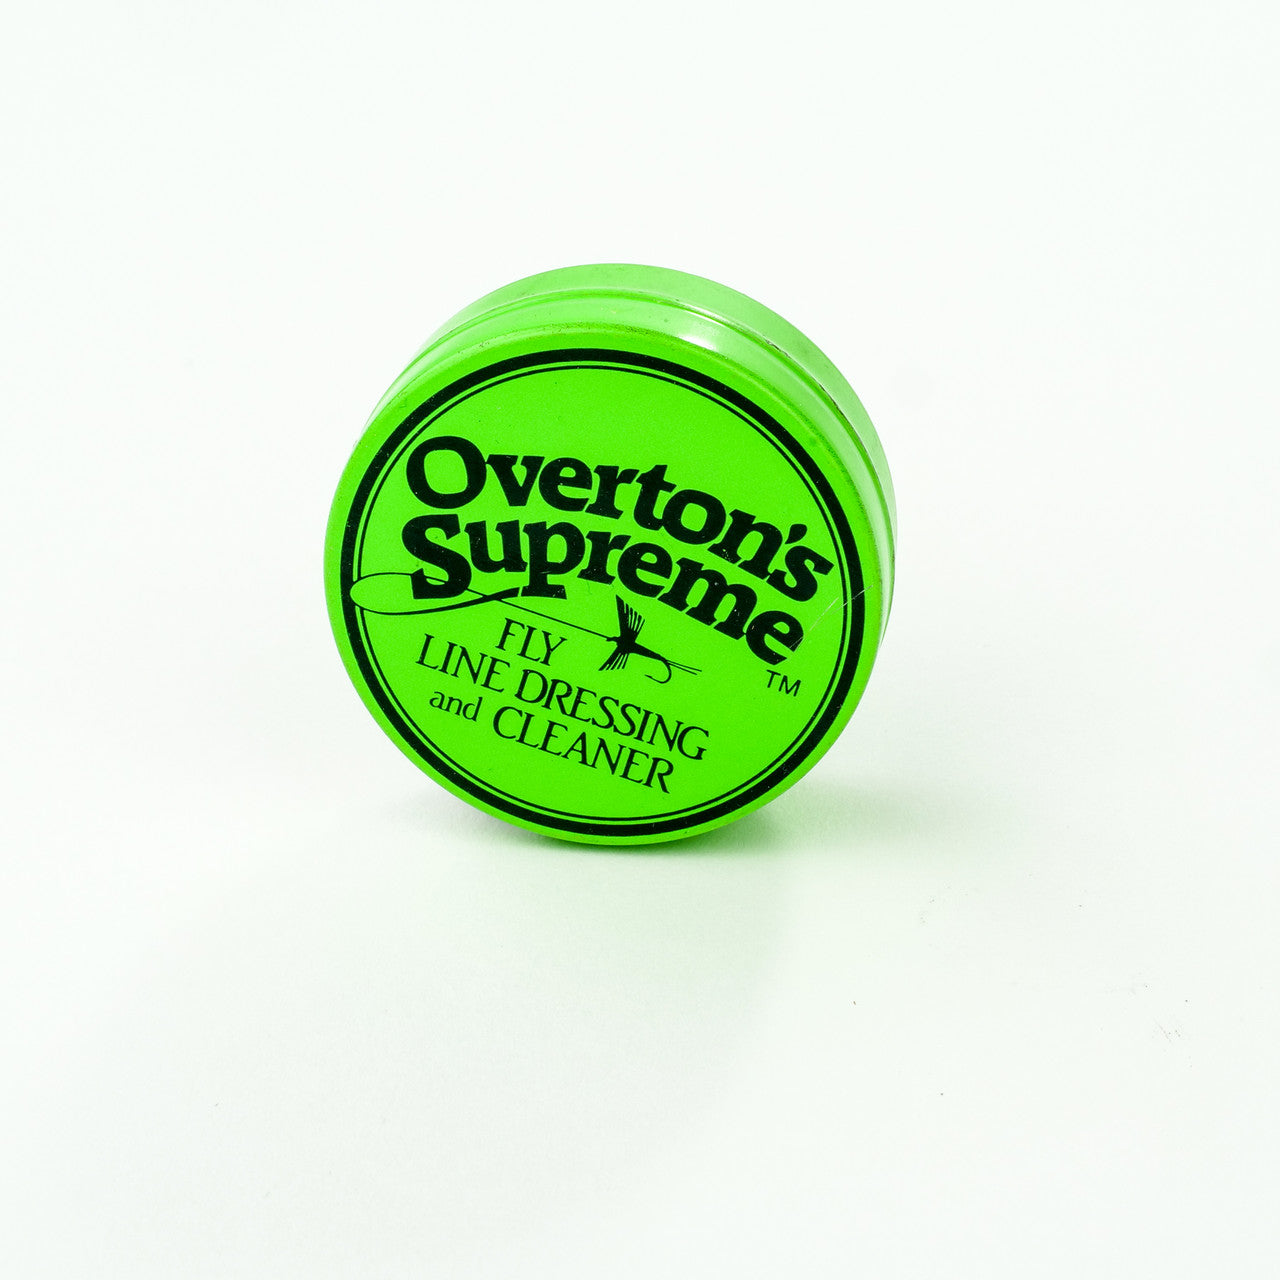 Overtons Supreme Fly Line Dressing & Cleaner